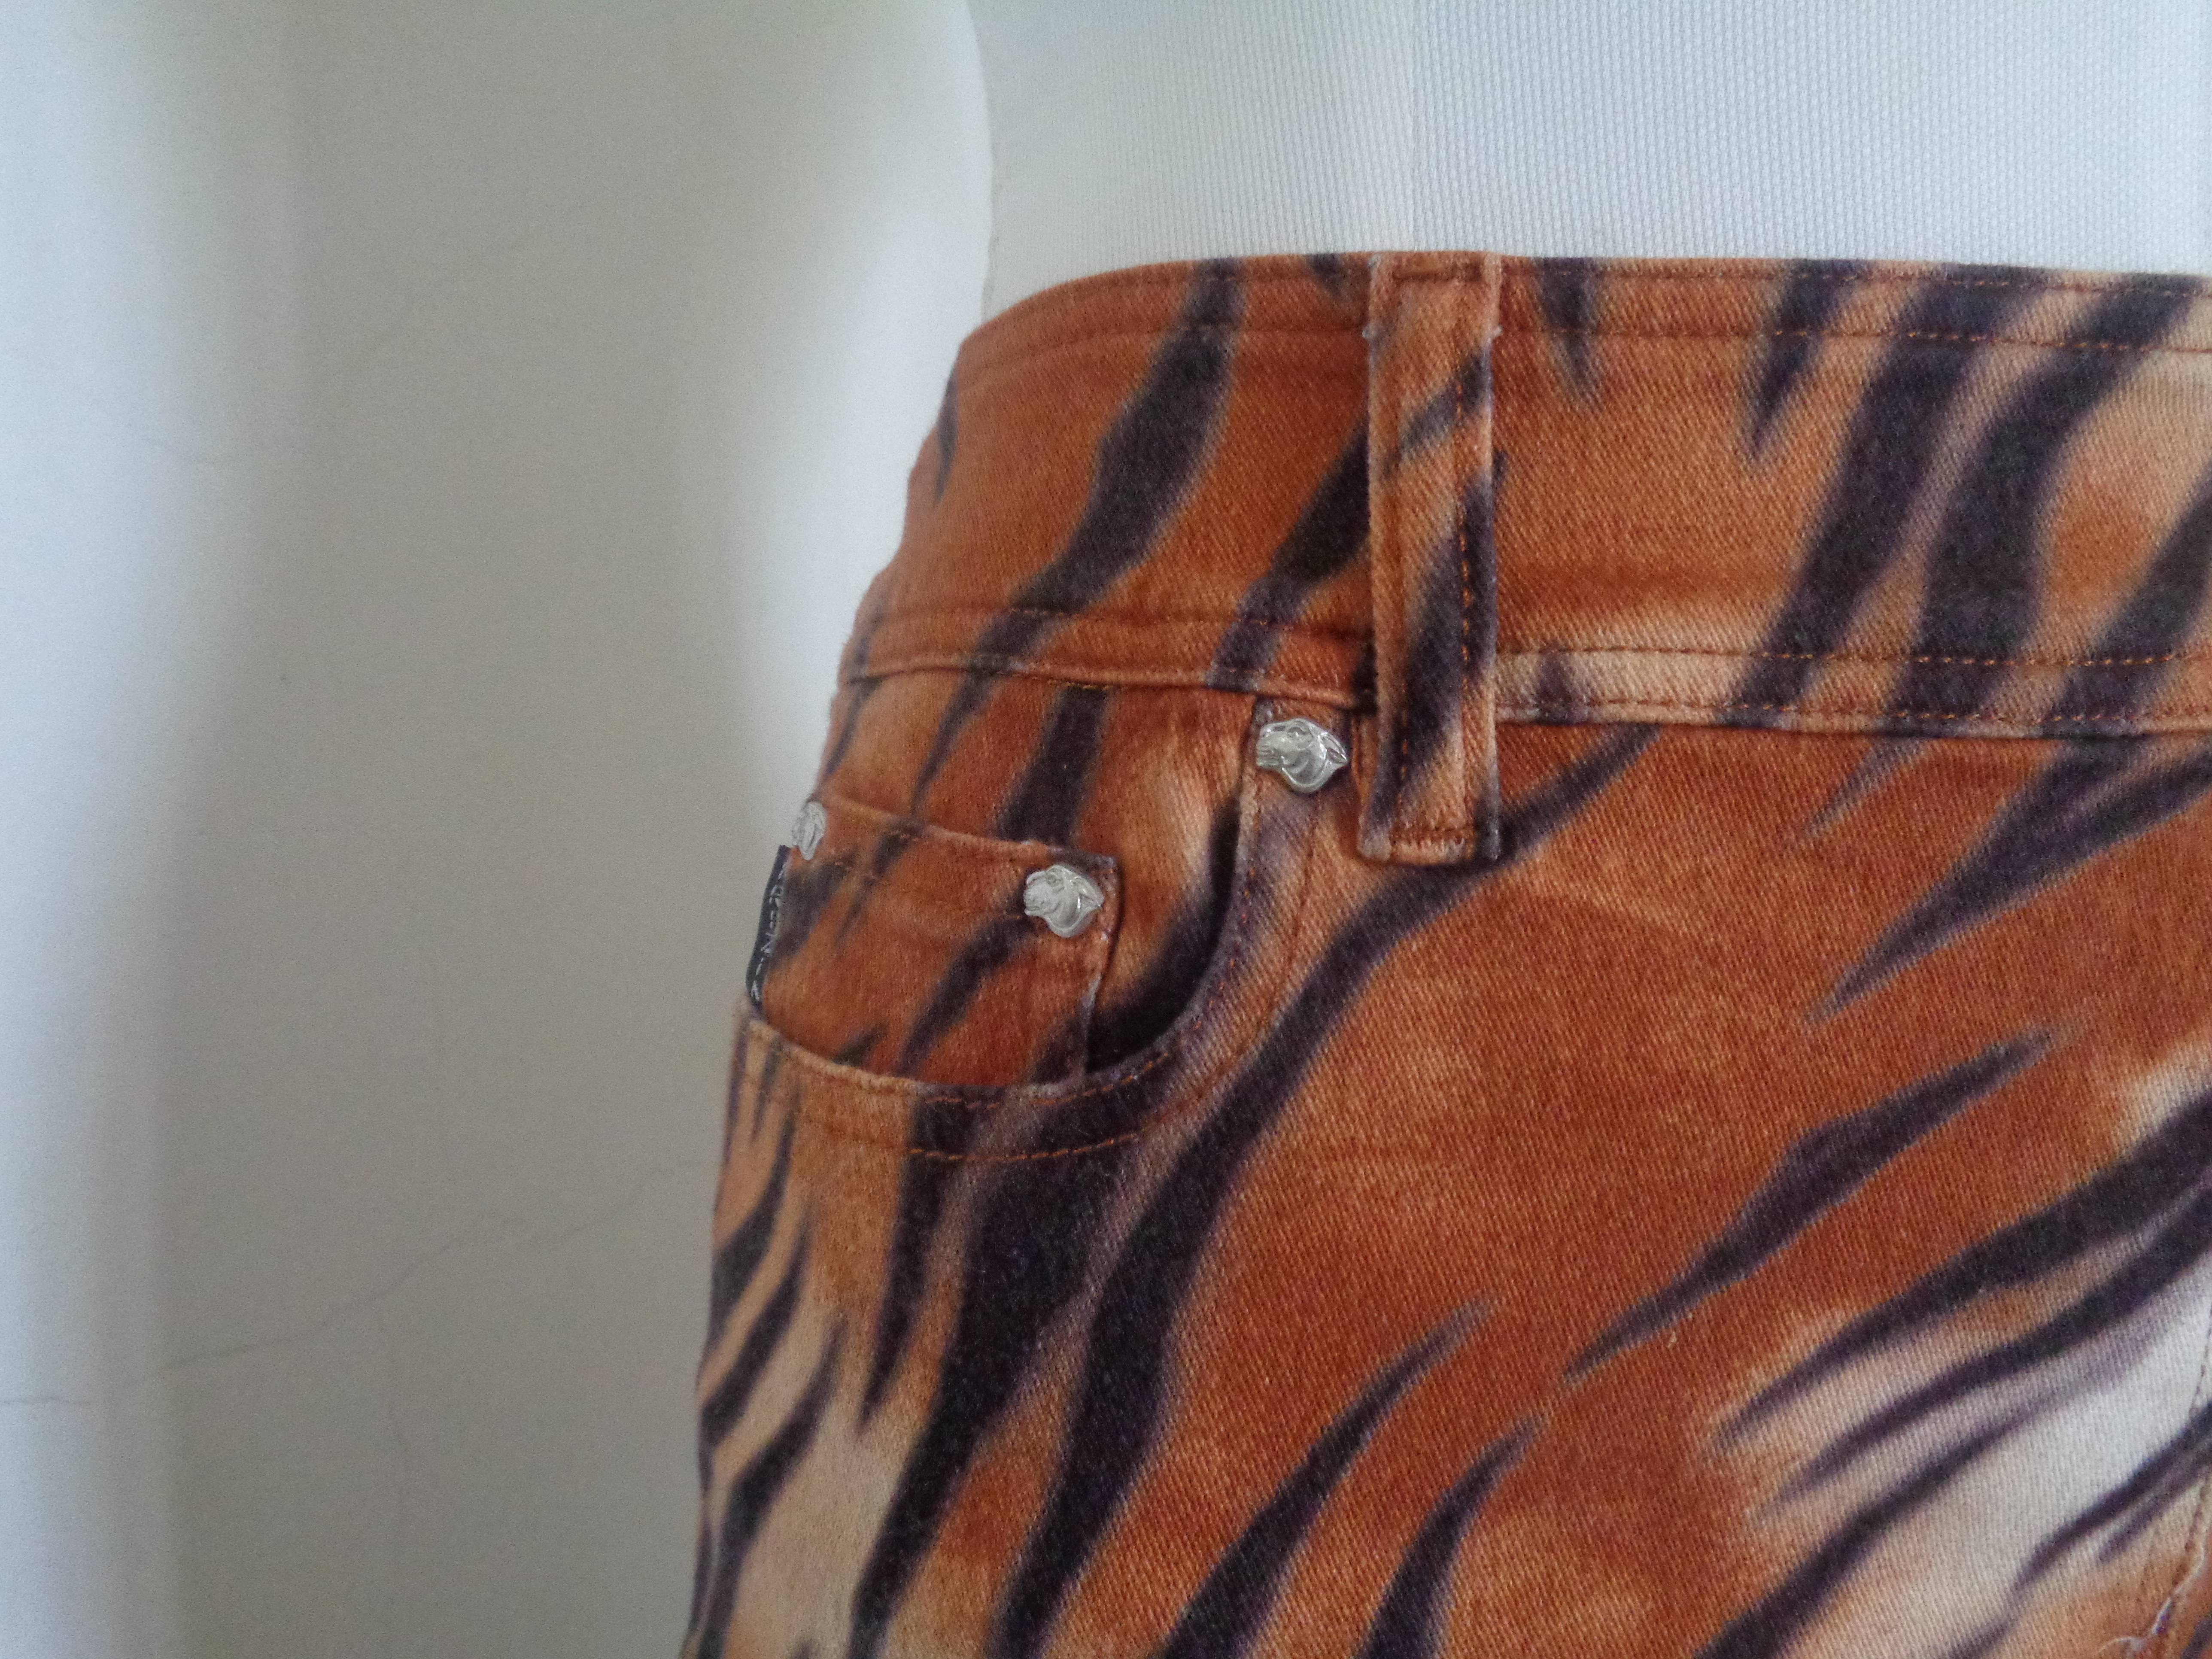 1980s Krizia Multicoloured Cotton Skirt
Size 44